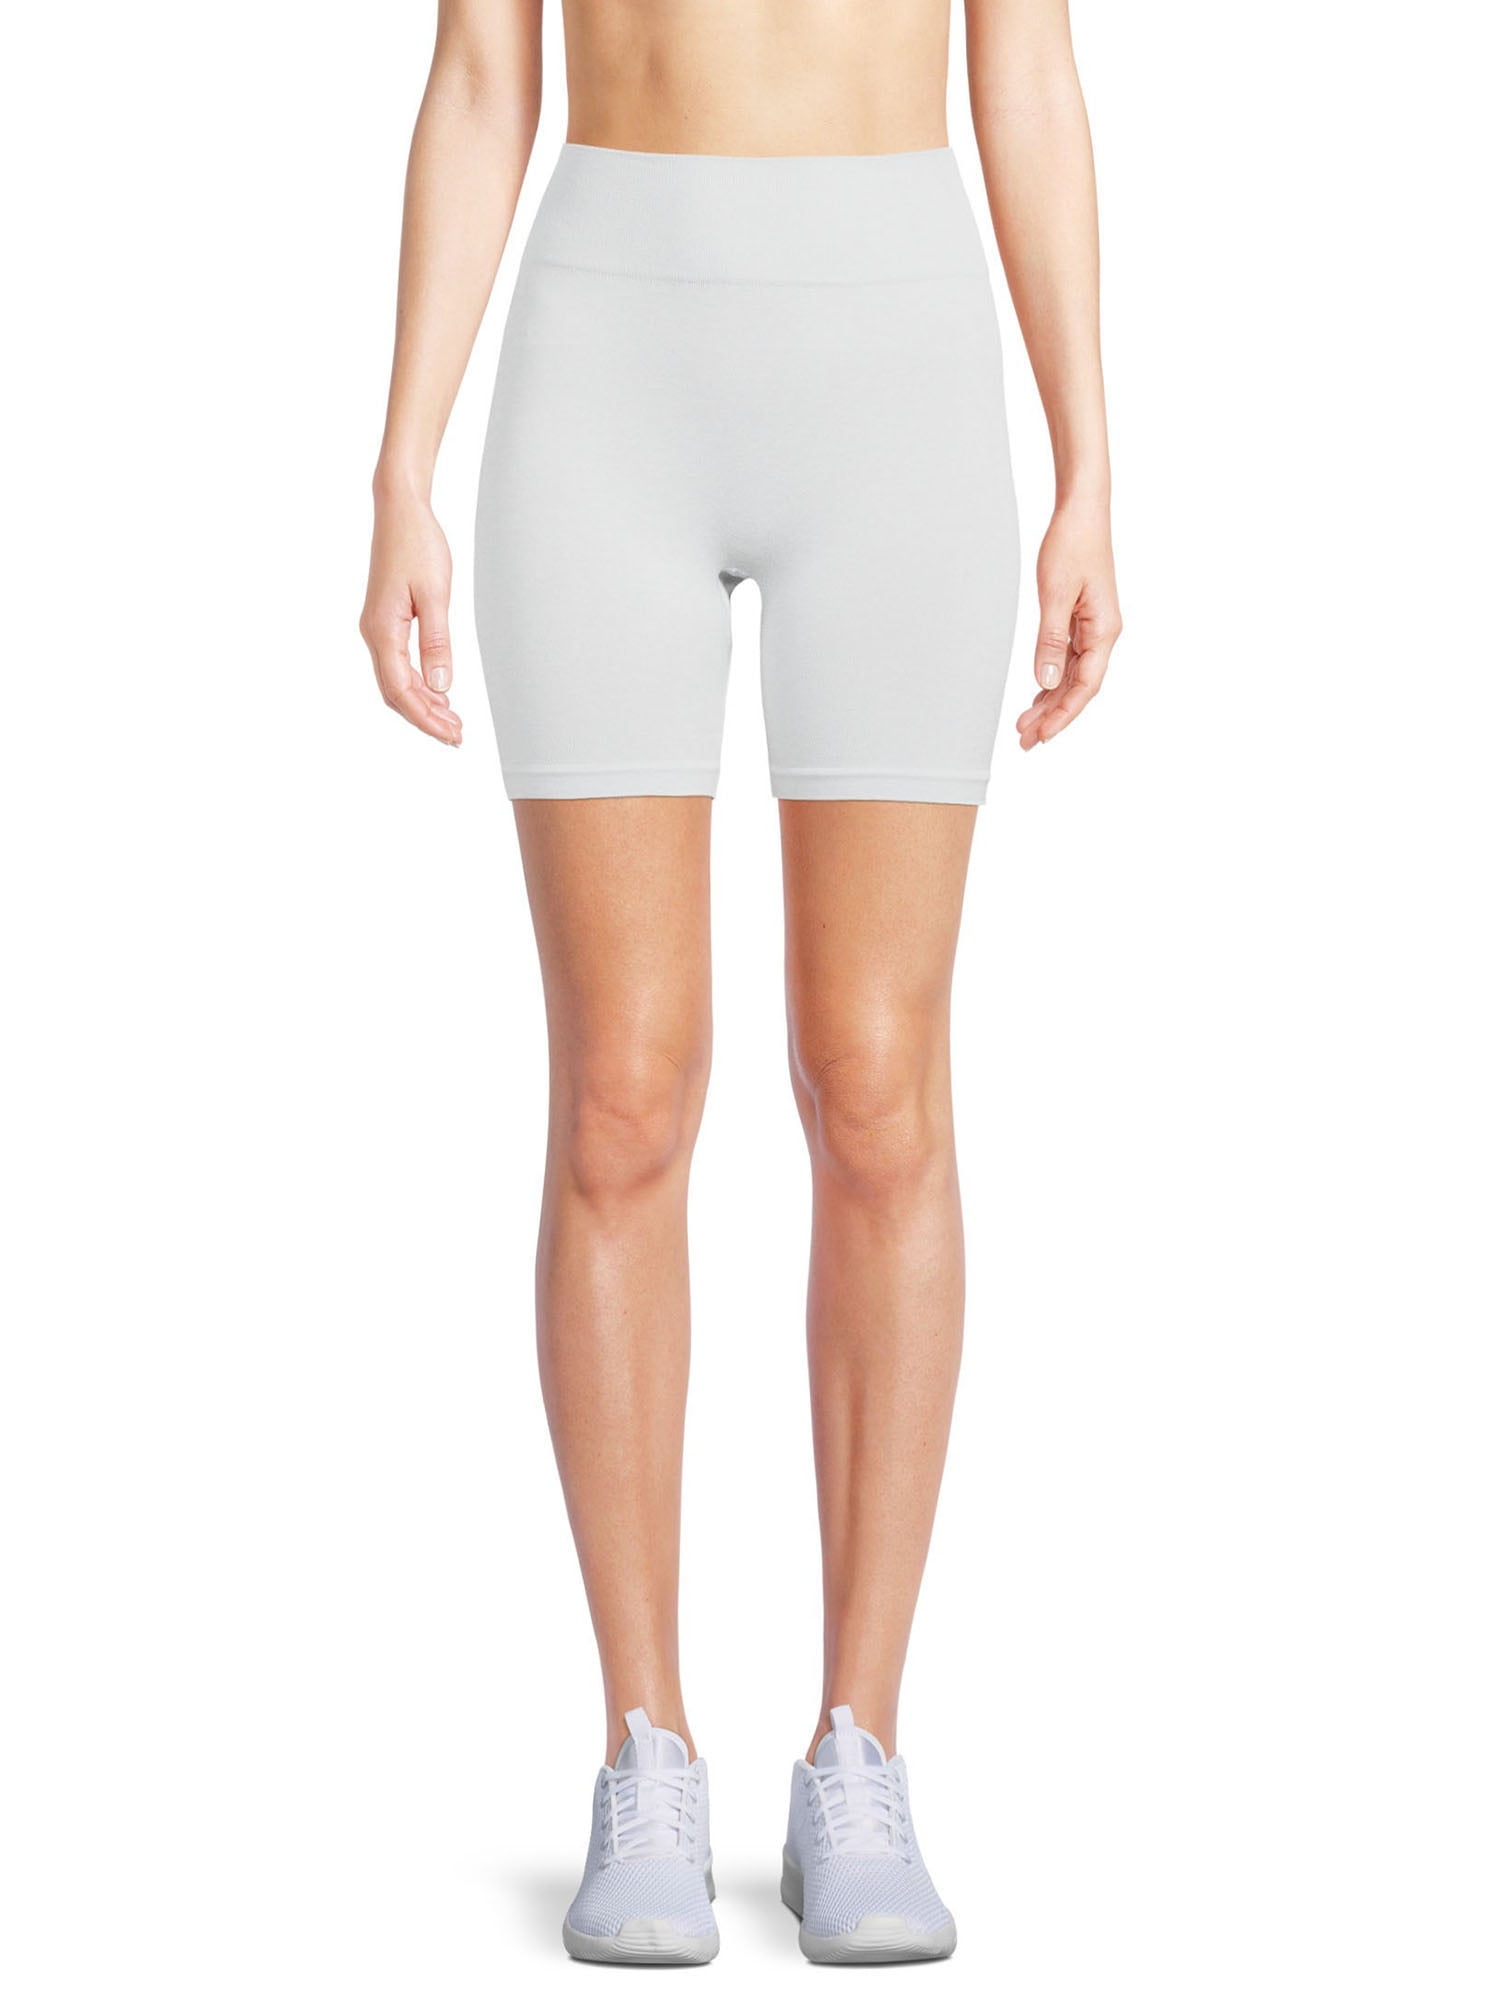 C CRUSH ORIGINAL 4 Pack Seamless High Waist Bike Shorts for Women Workout Yoga Sports Wear Running